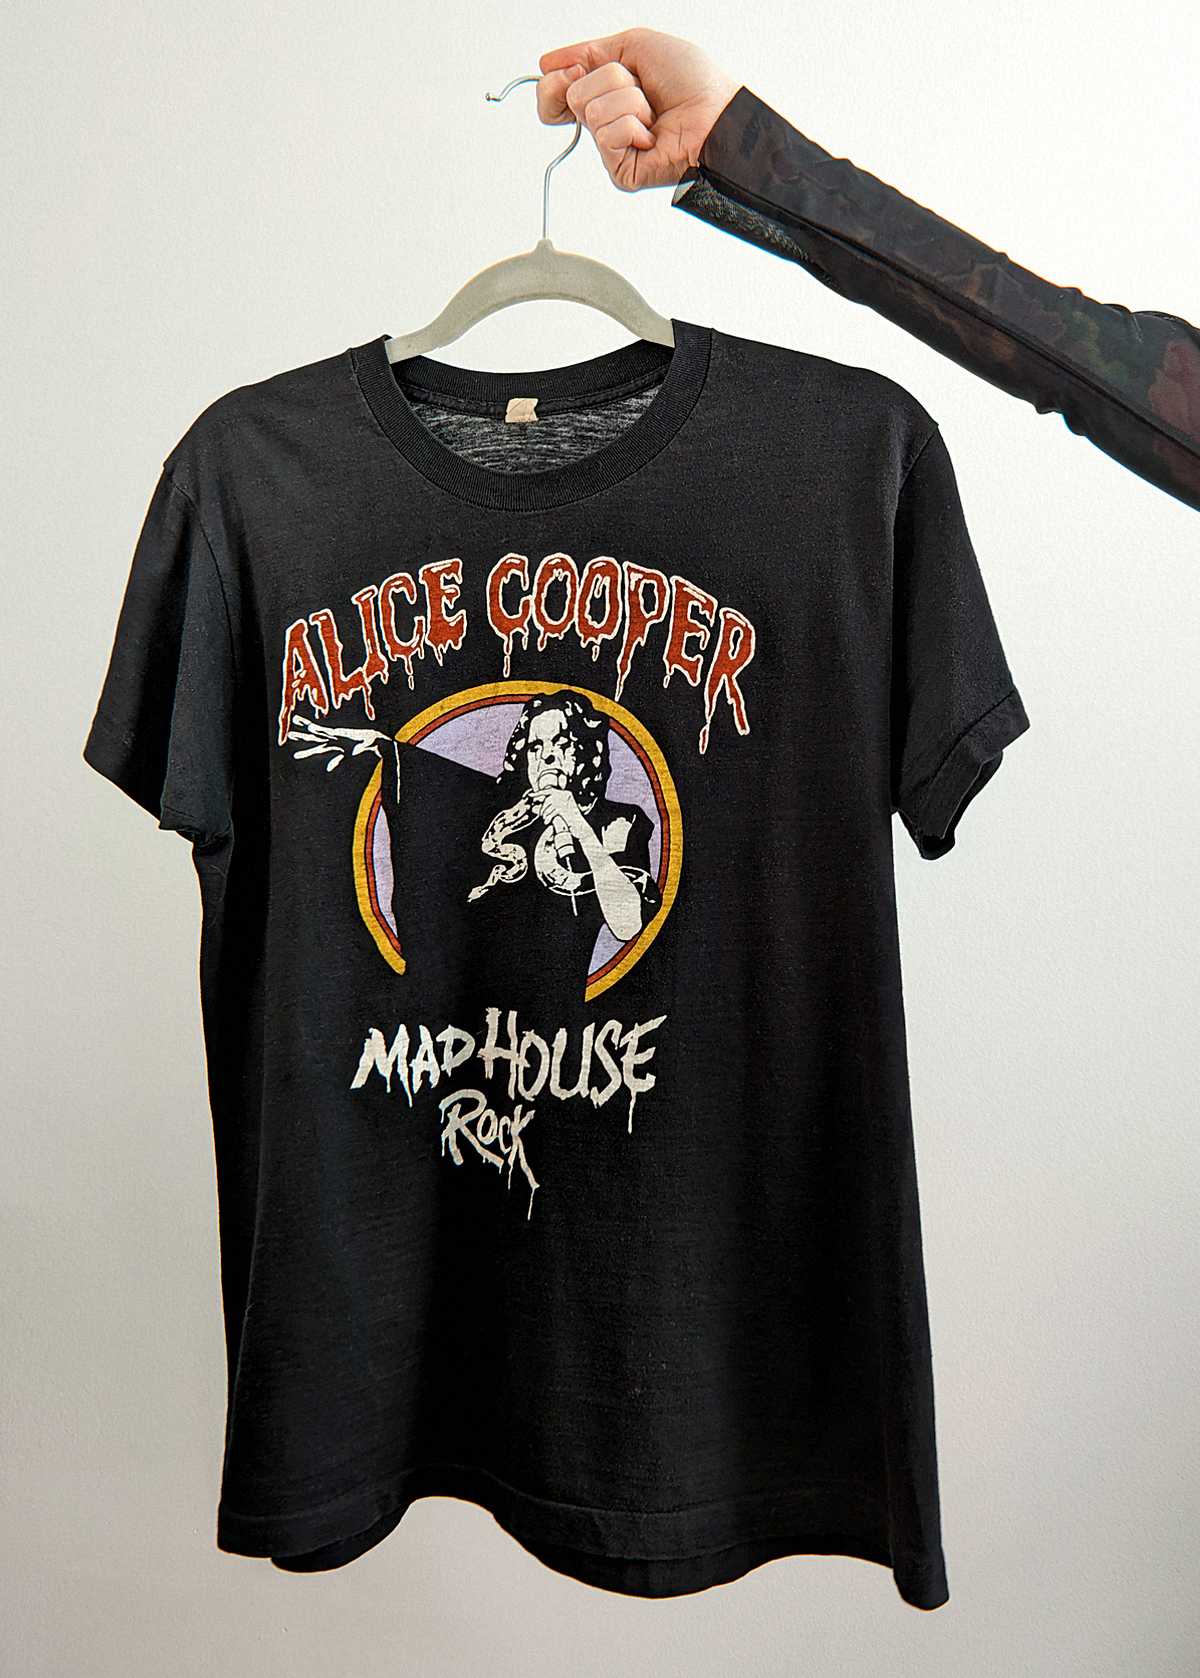 Vintage 1979 Alice Cooper Mad House Rock Tee